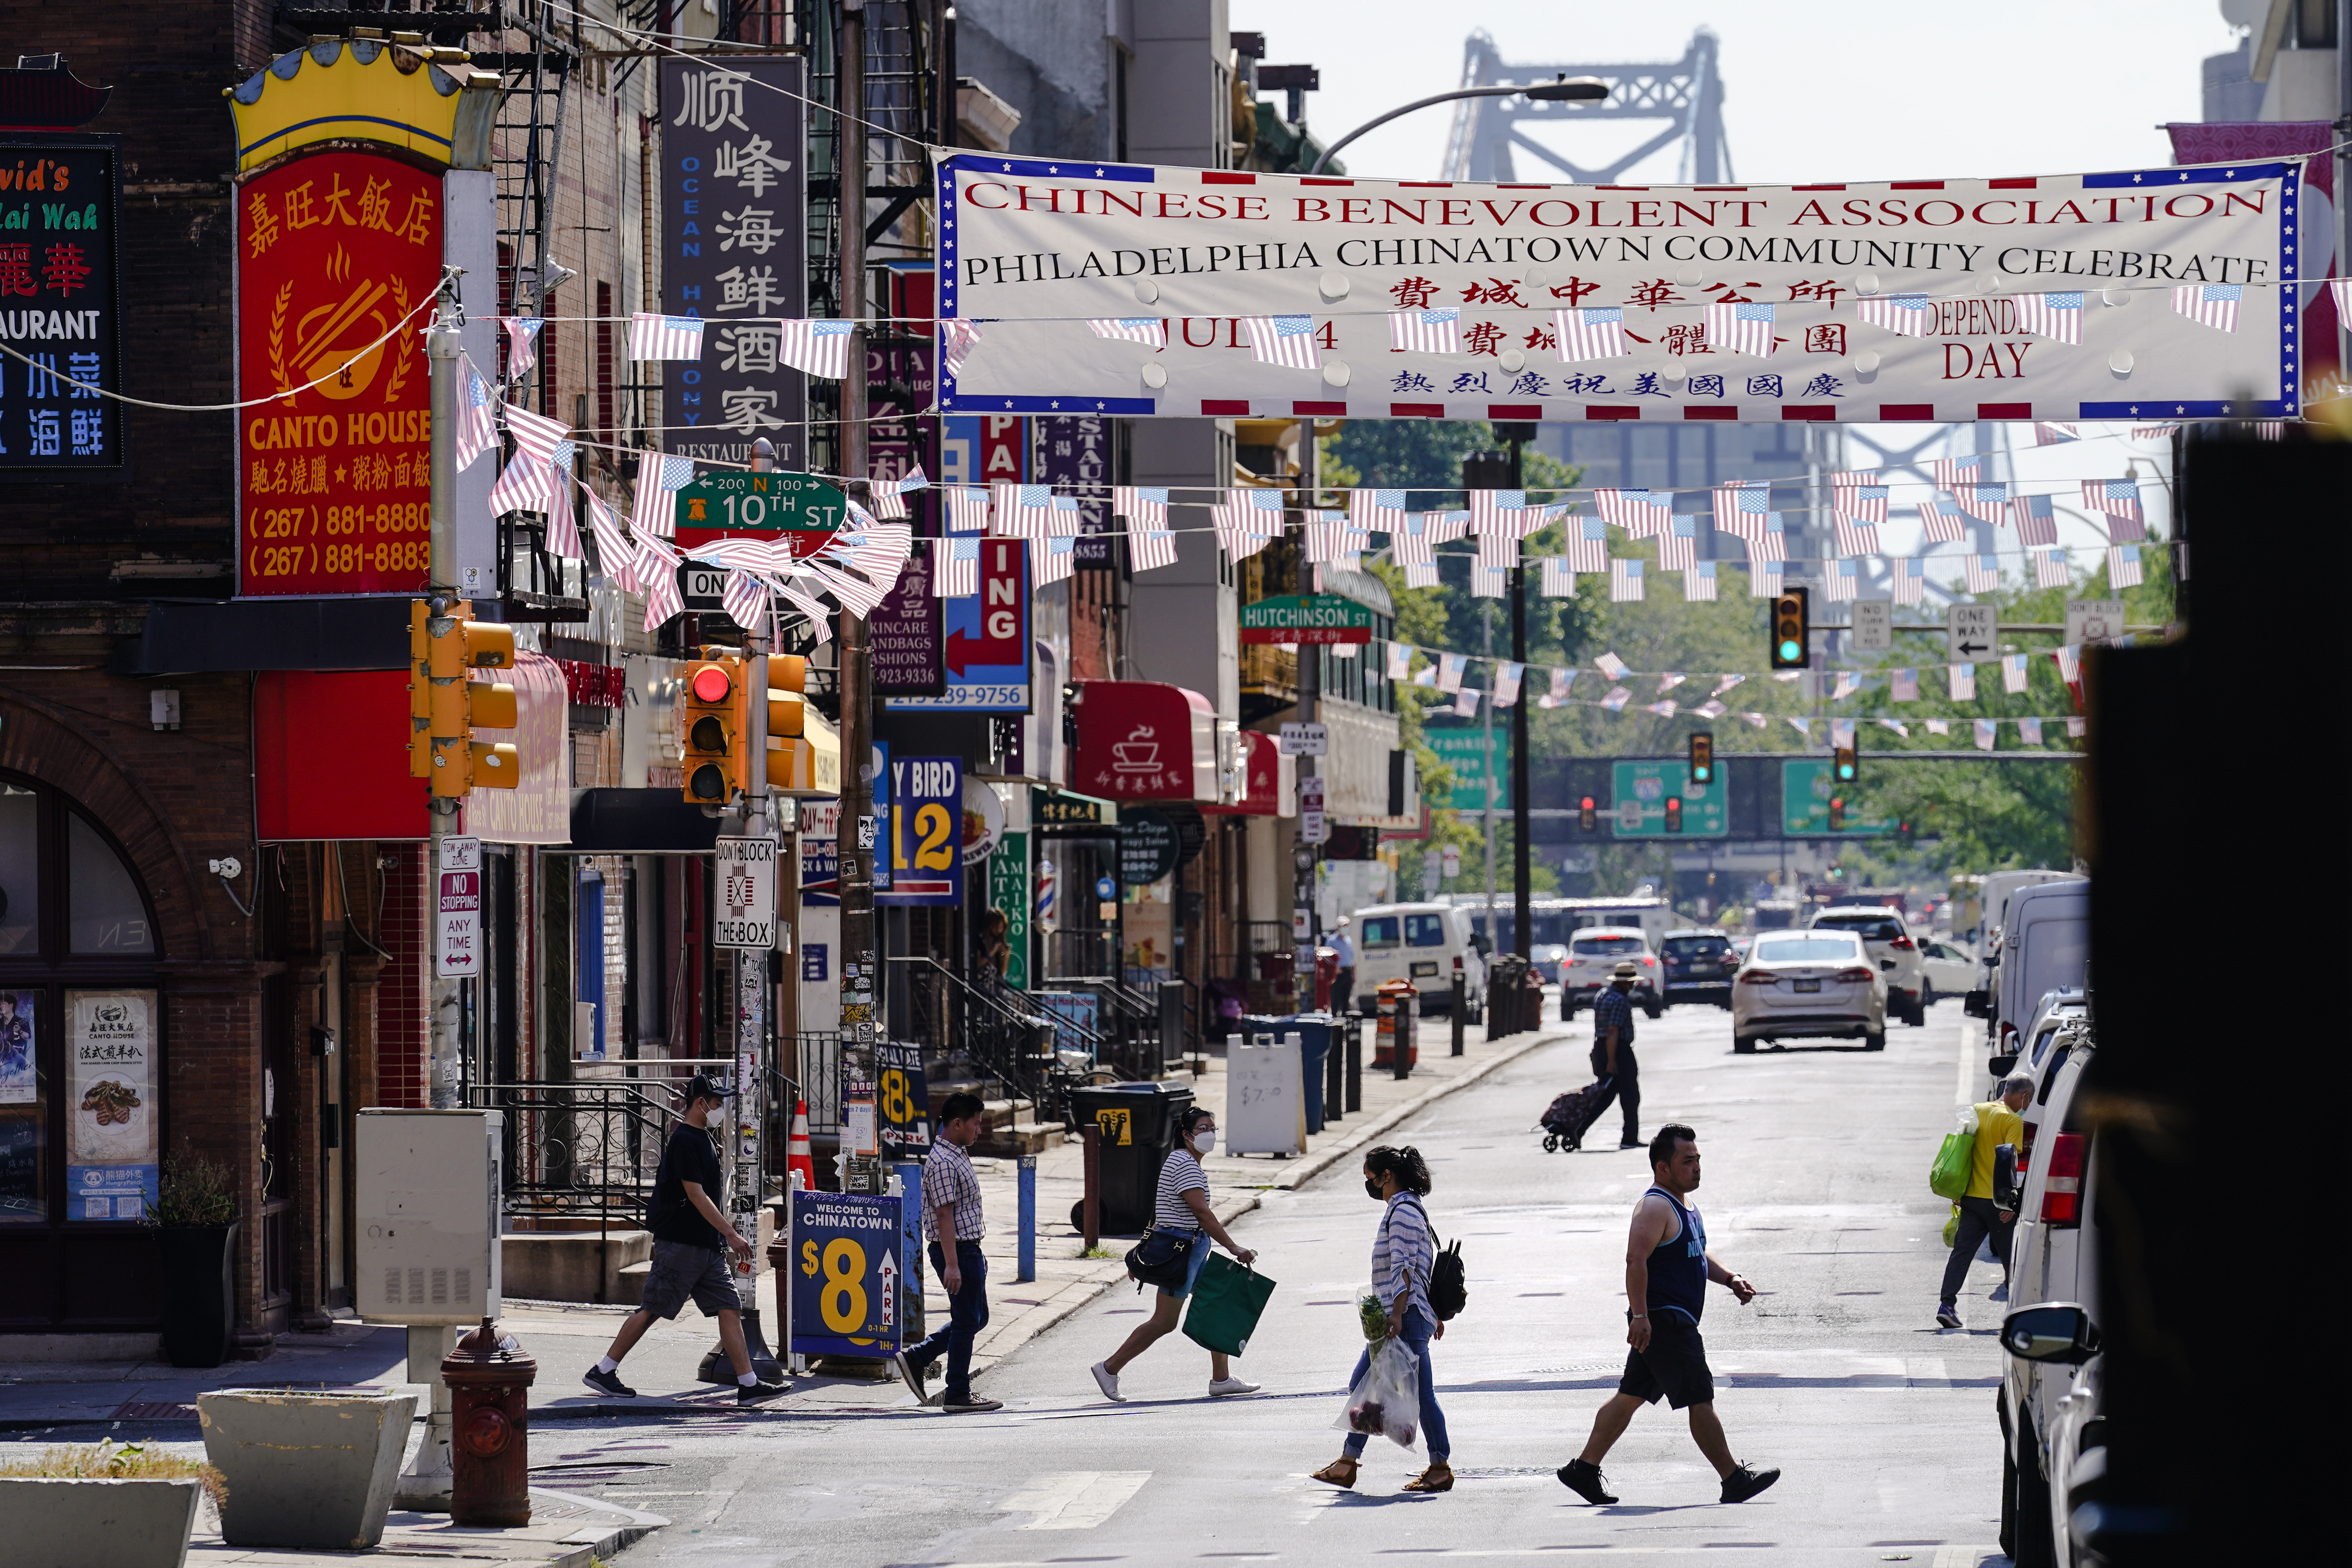 Sudden arena idea angers, unnerves Philadelphia's Chinatown